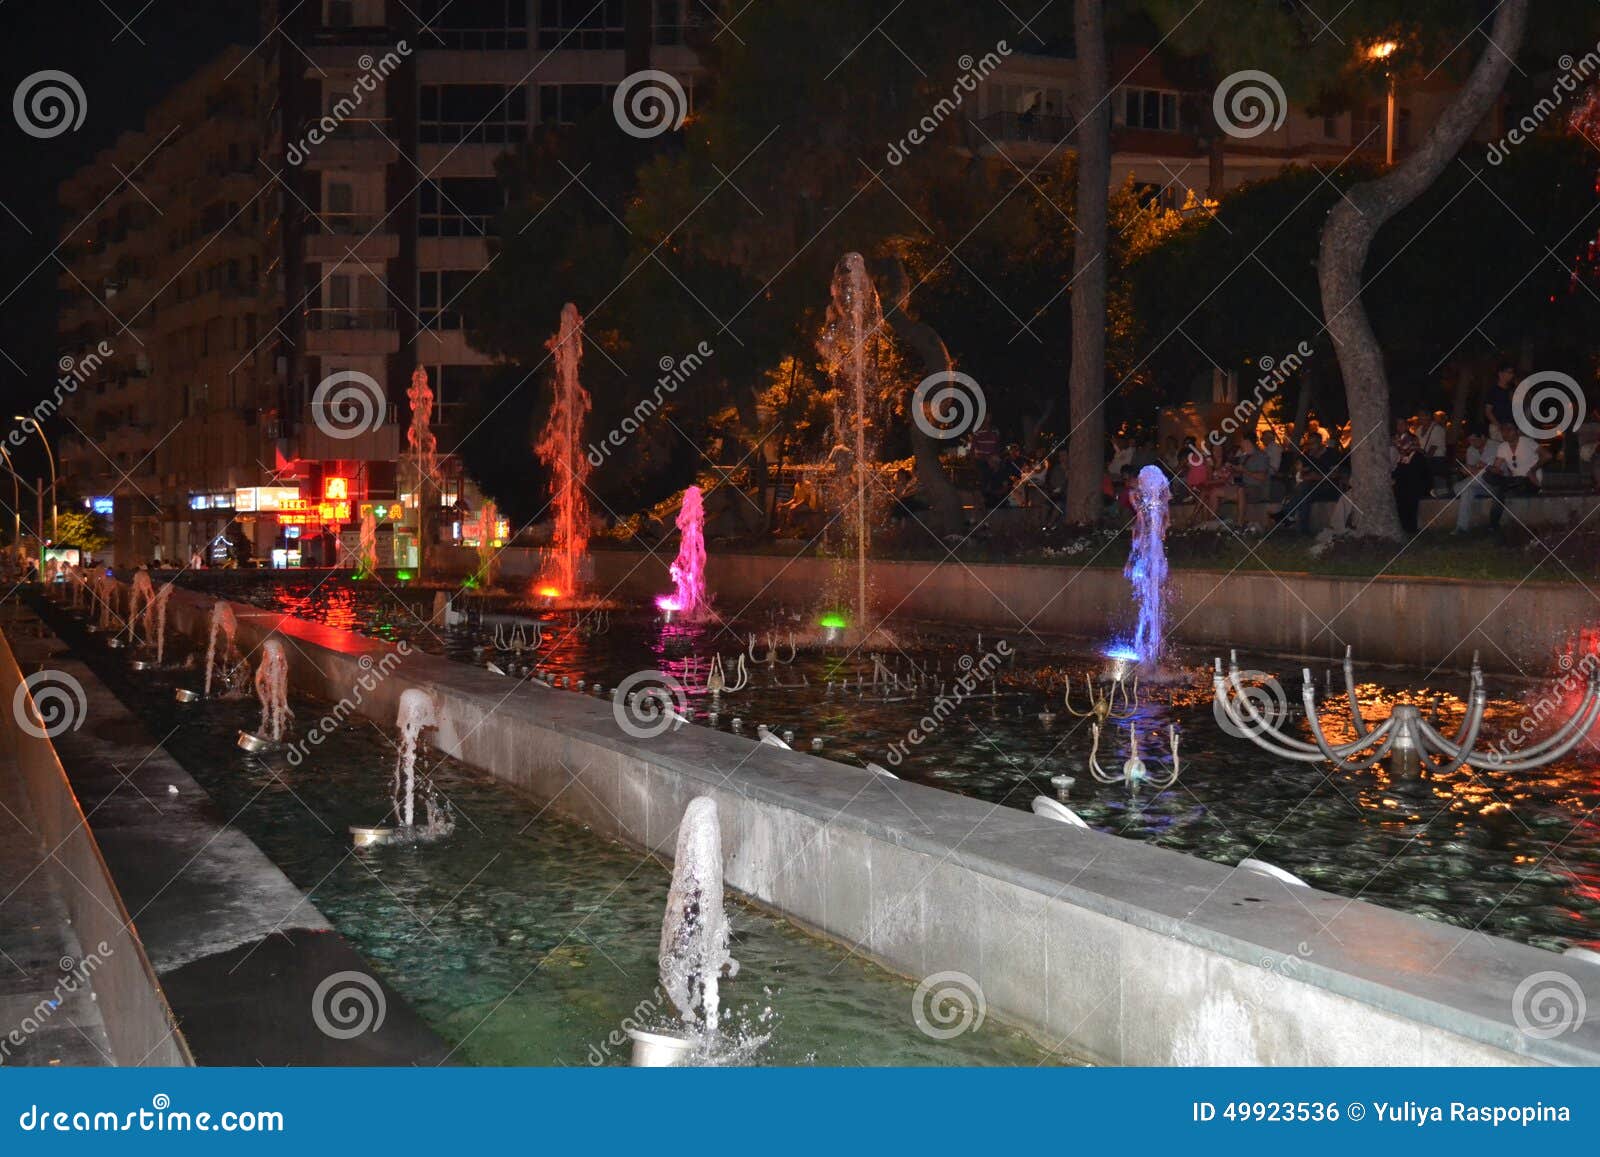 fountains in antalia city